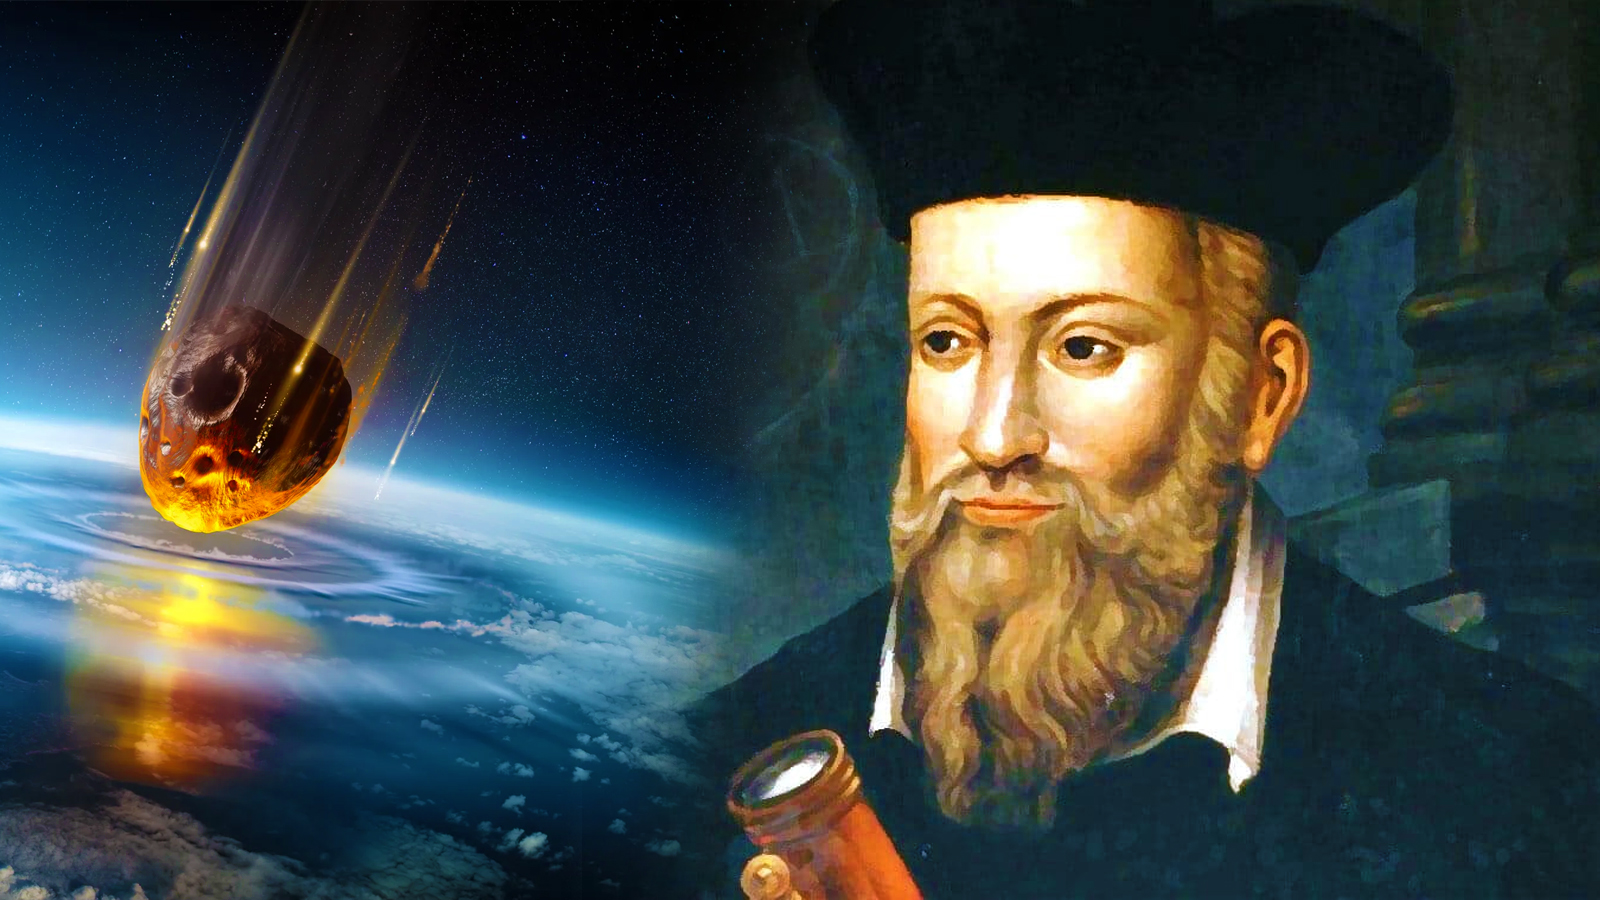 Nostradamus Predictions